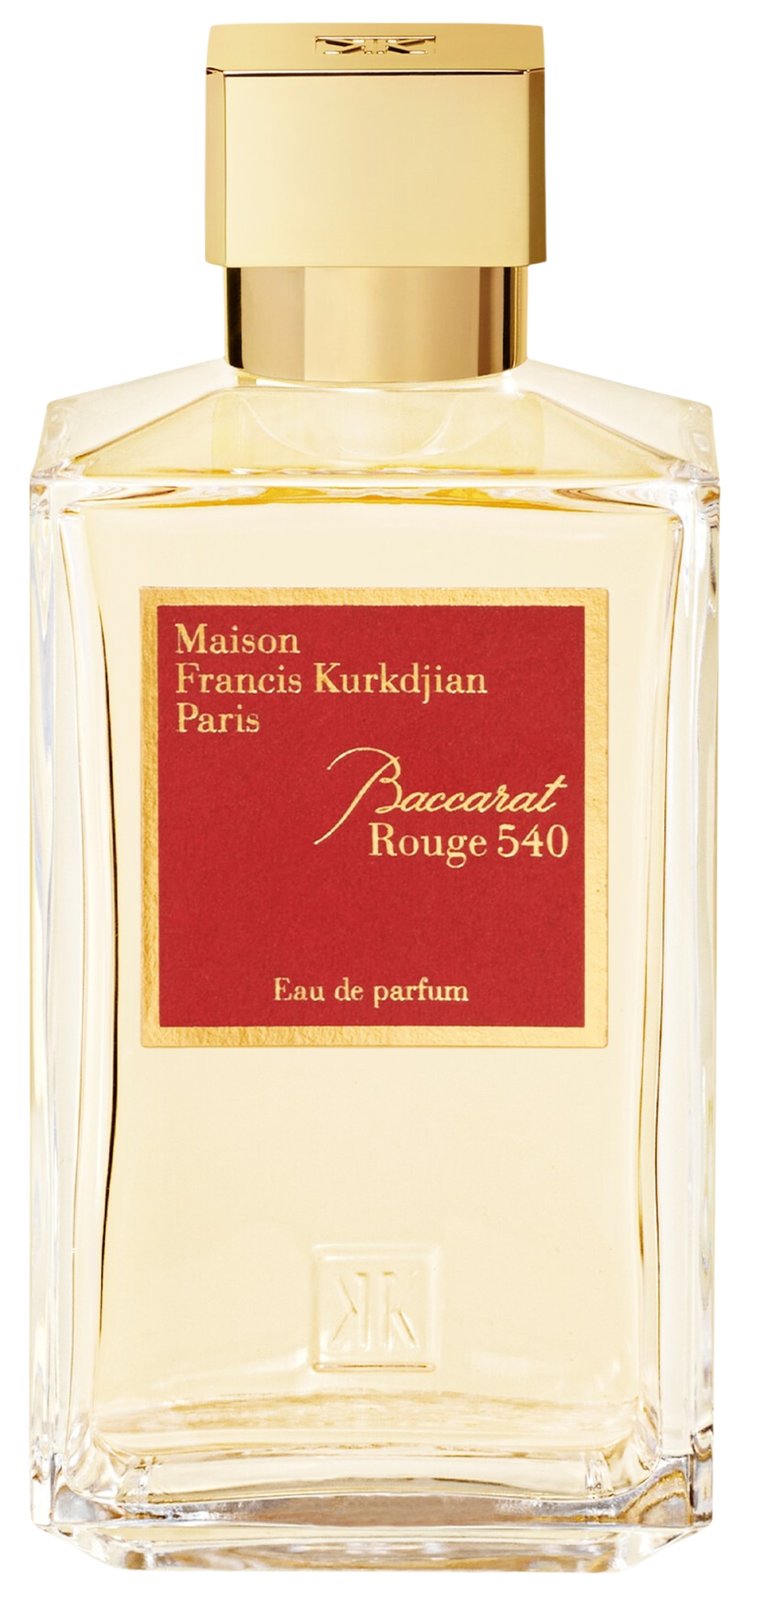 Maison Francis Kurkdjian Baccarat Rouge 540 - Eau de Parfum | Ingredients